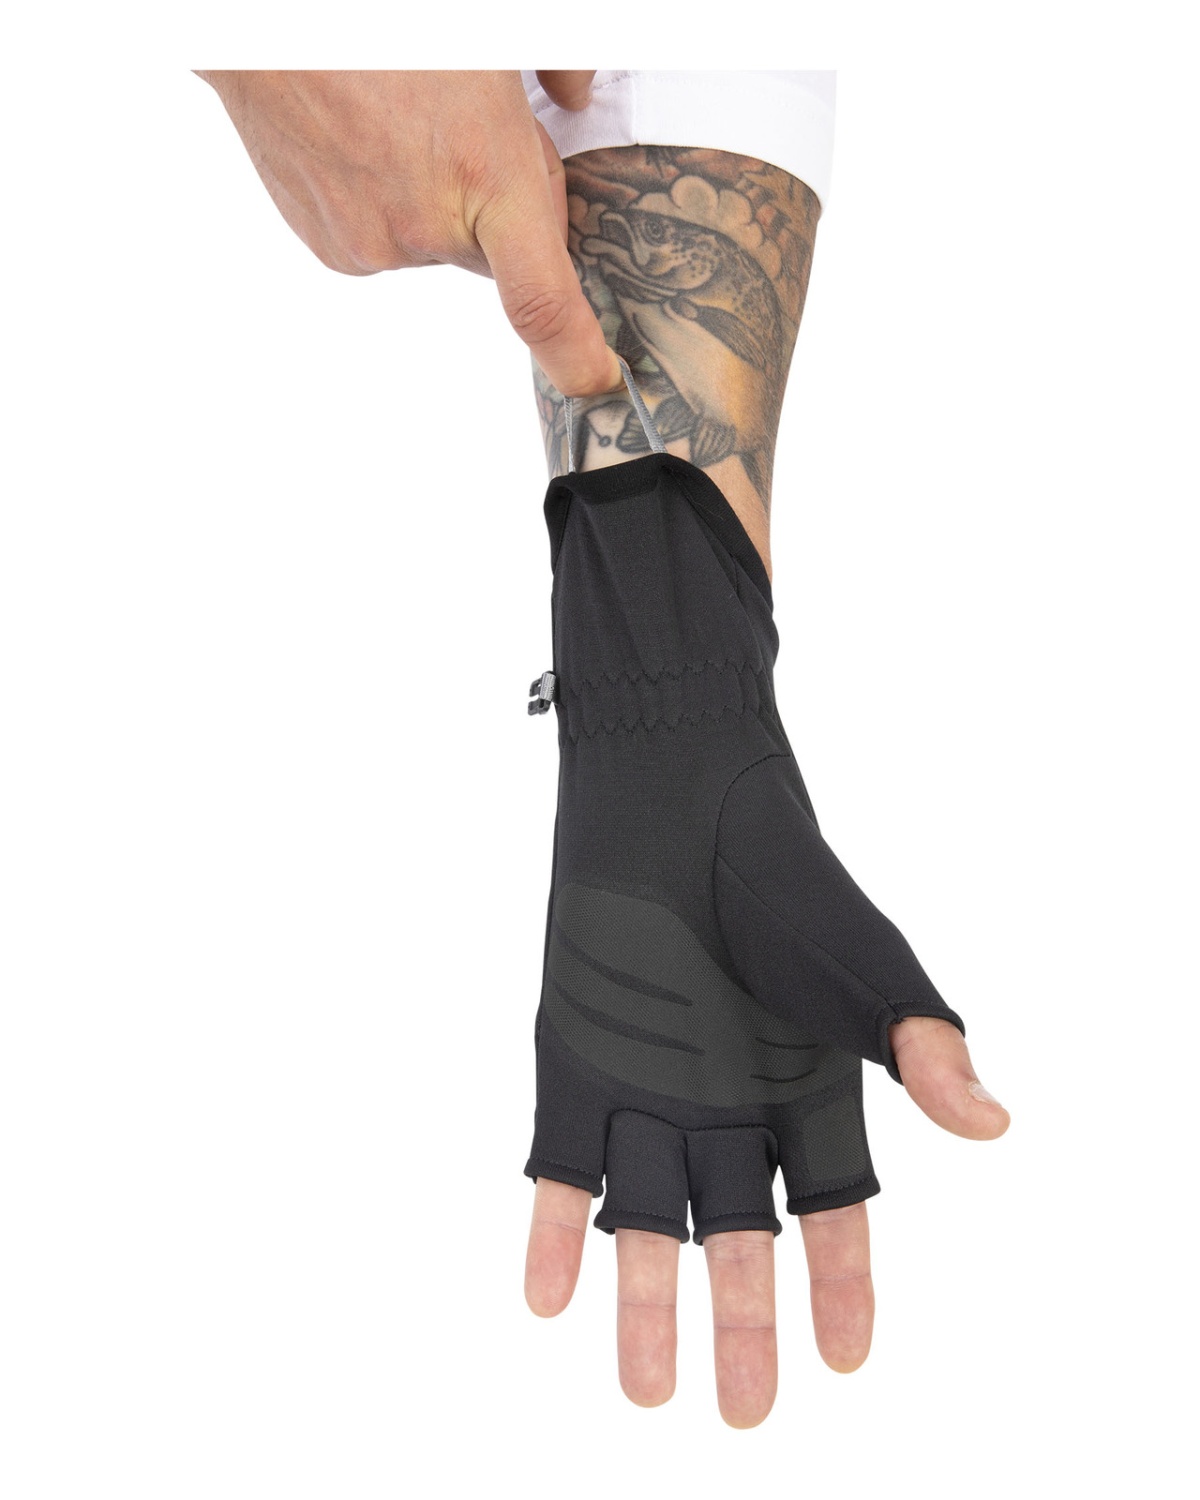 Simms ExStream Neoprene Glove, black